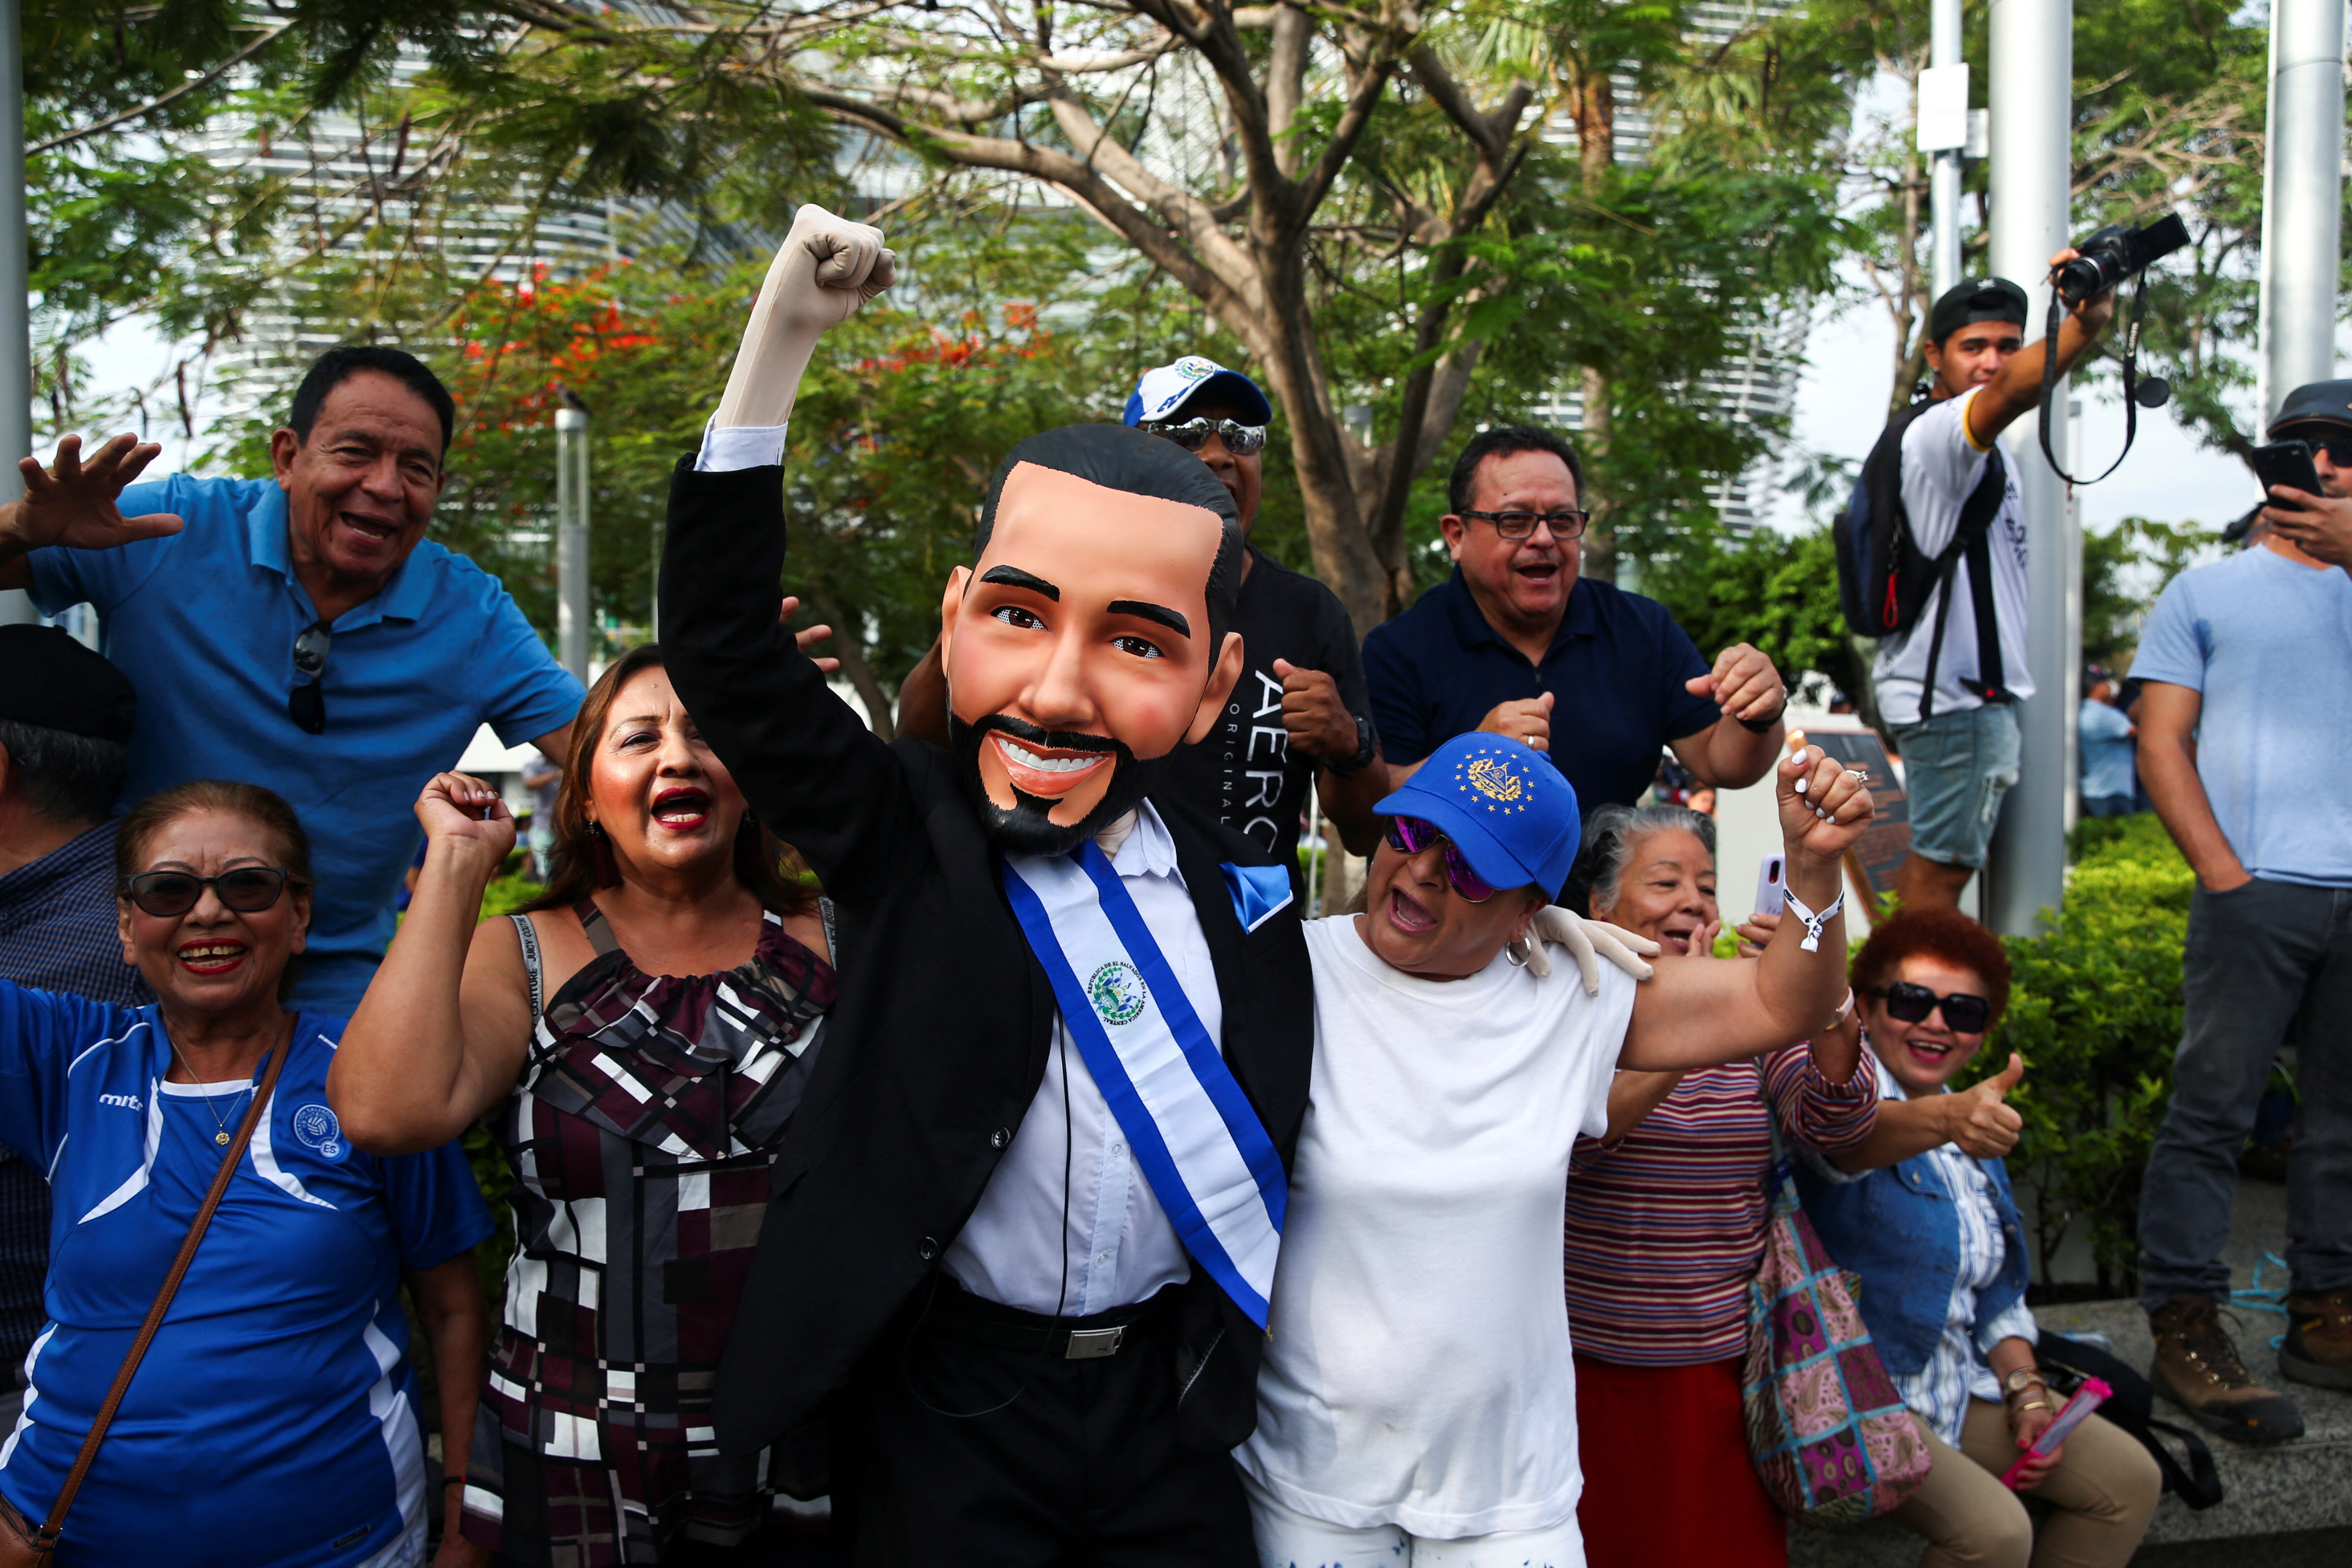 El Salvador's President Bukele's swearing-in ceremony in San Salvador